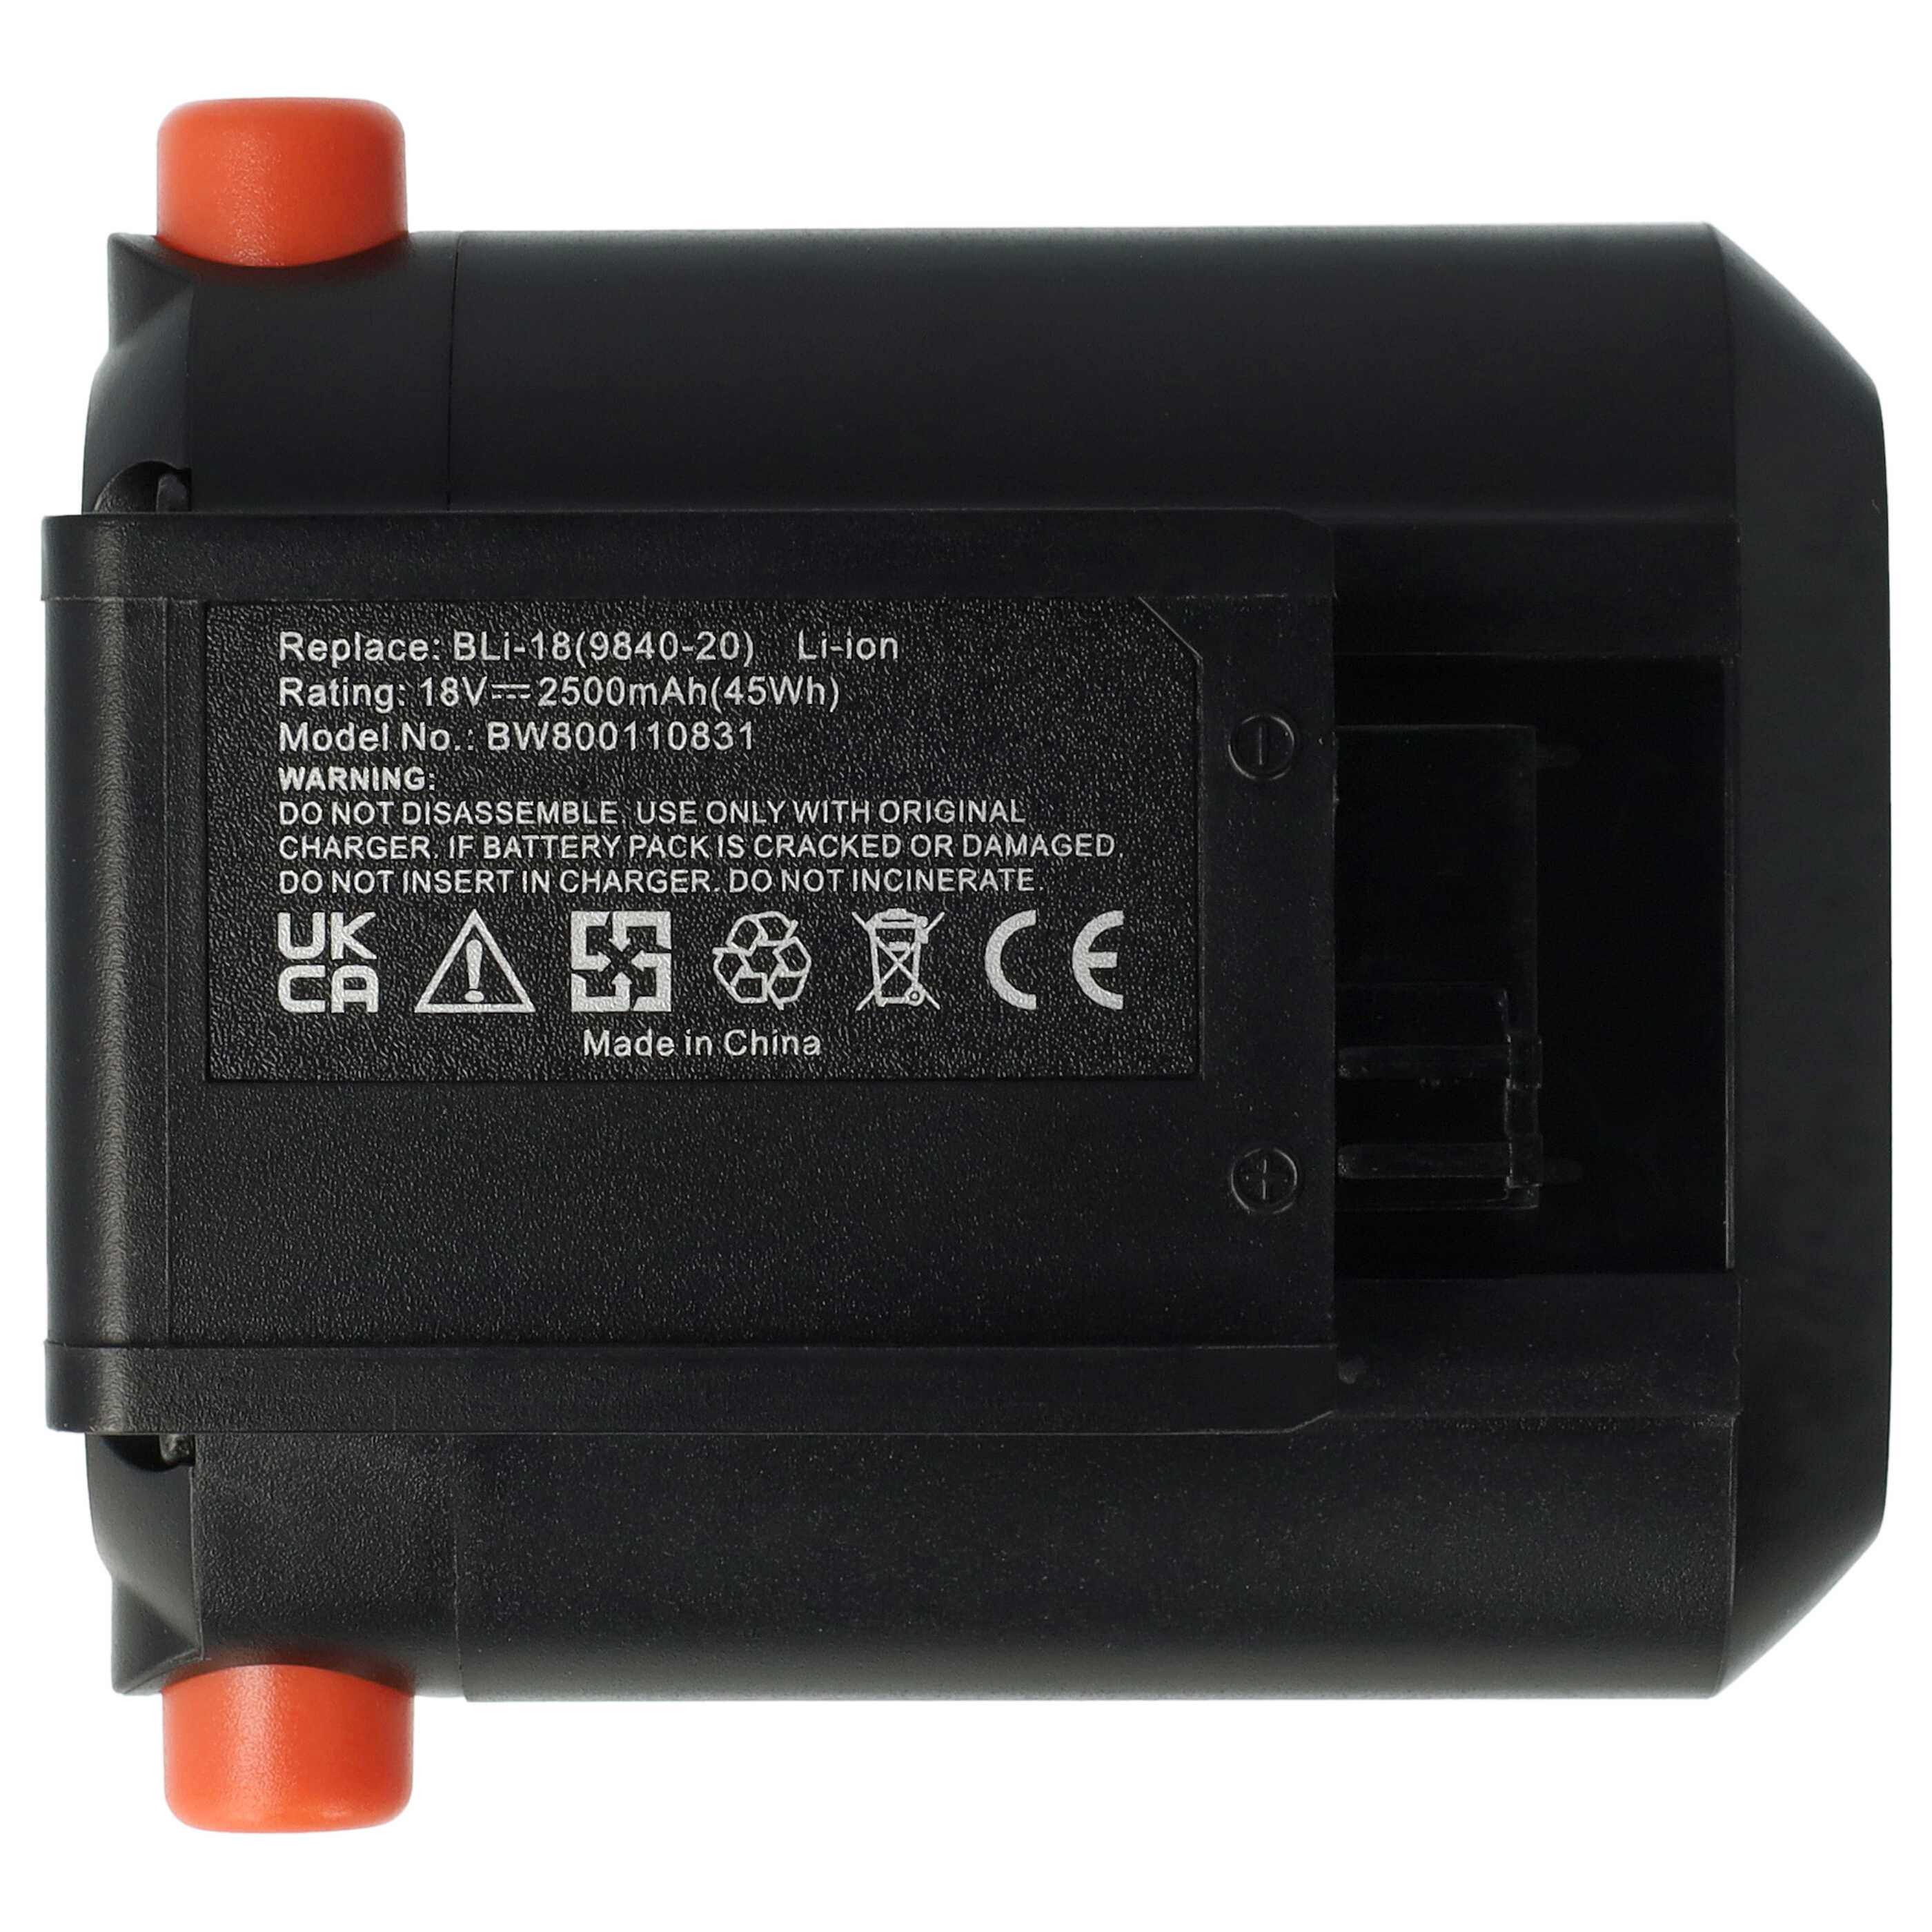 Akumulator do robota koszącego zamiennik Gardena BLi-18, 9839-20, 9840-20 - 2500 mAh 18 V Li-Ion, czarny